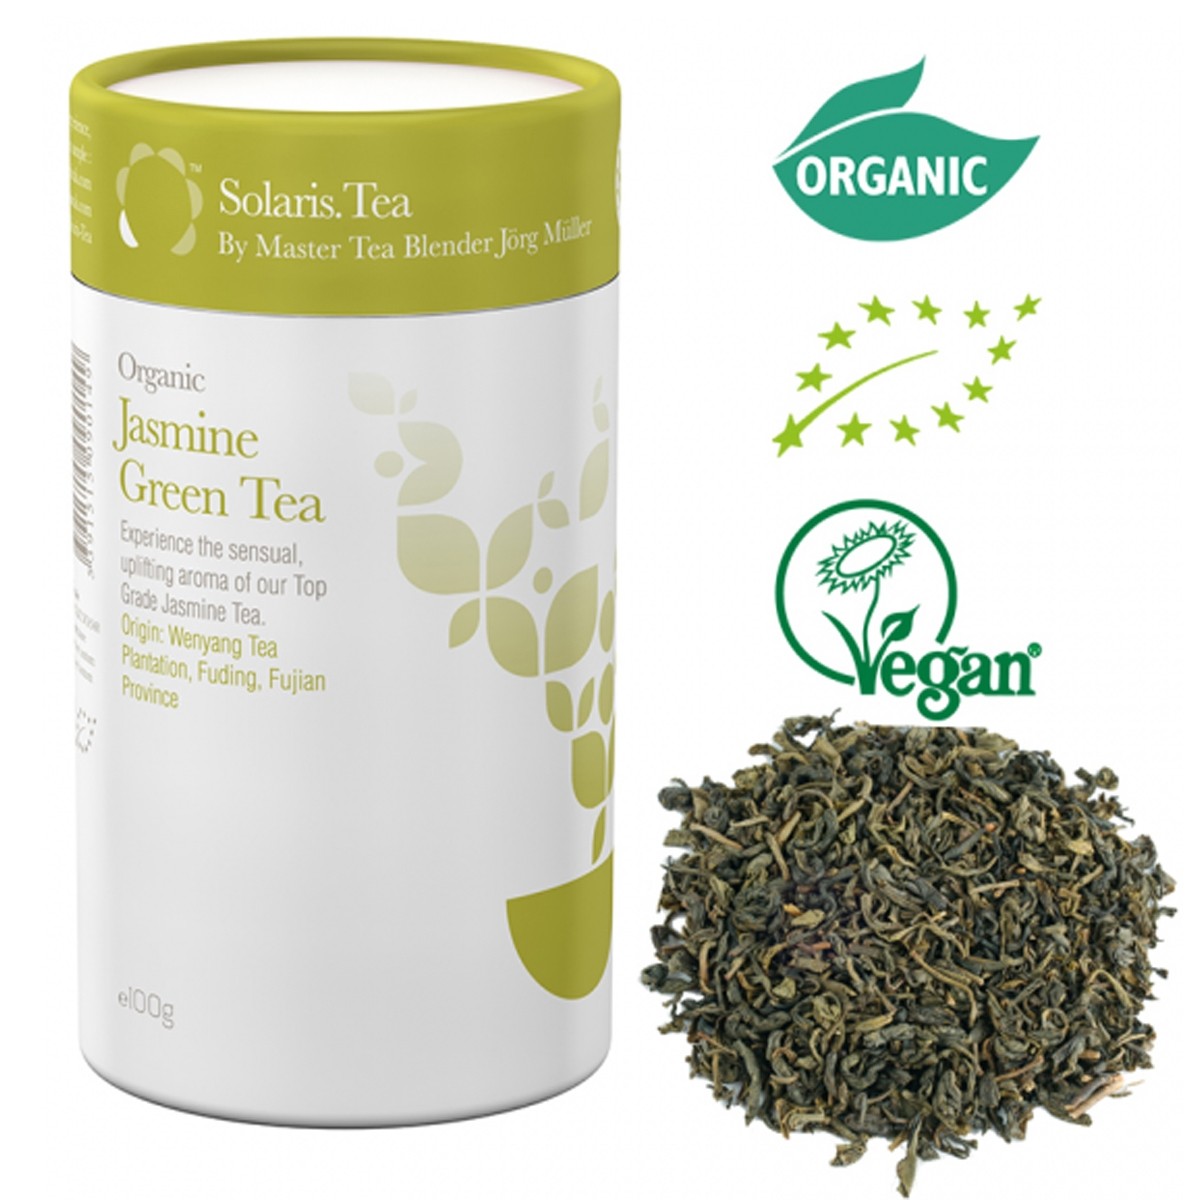 Solaris Organic Jasmine Green Tea Award Winner